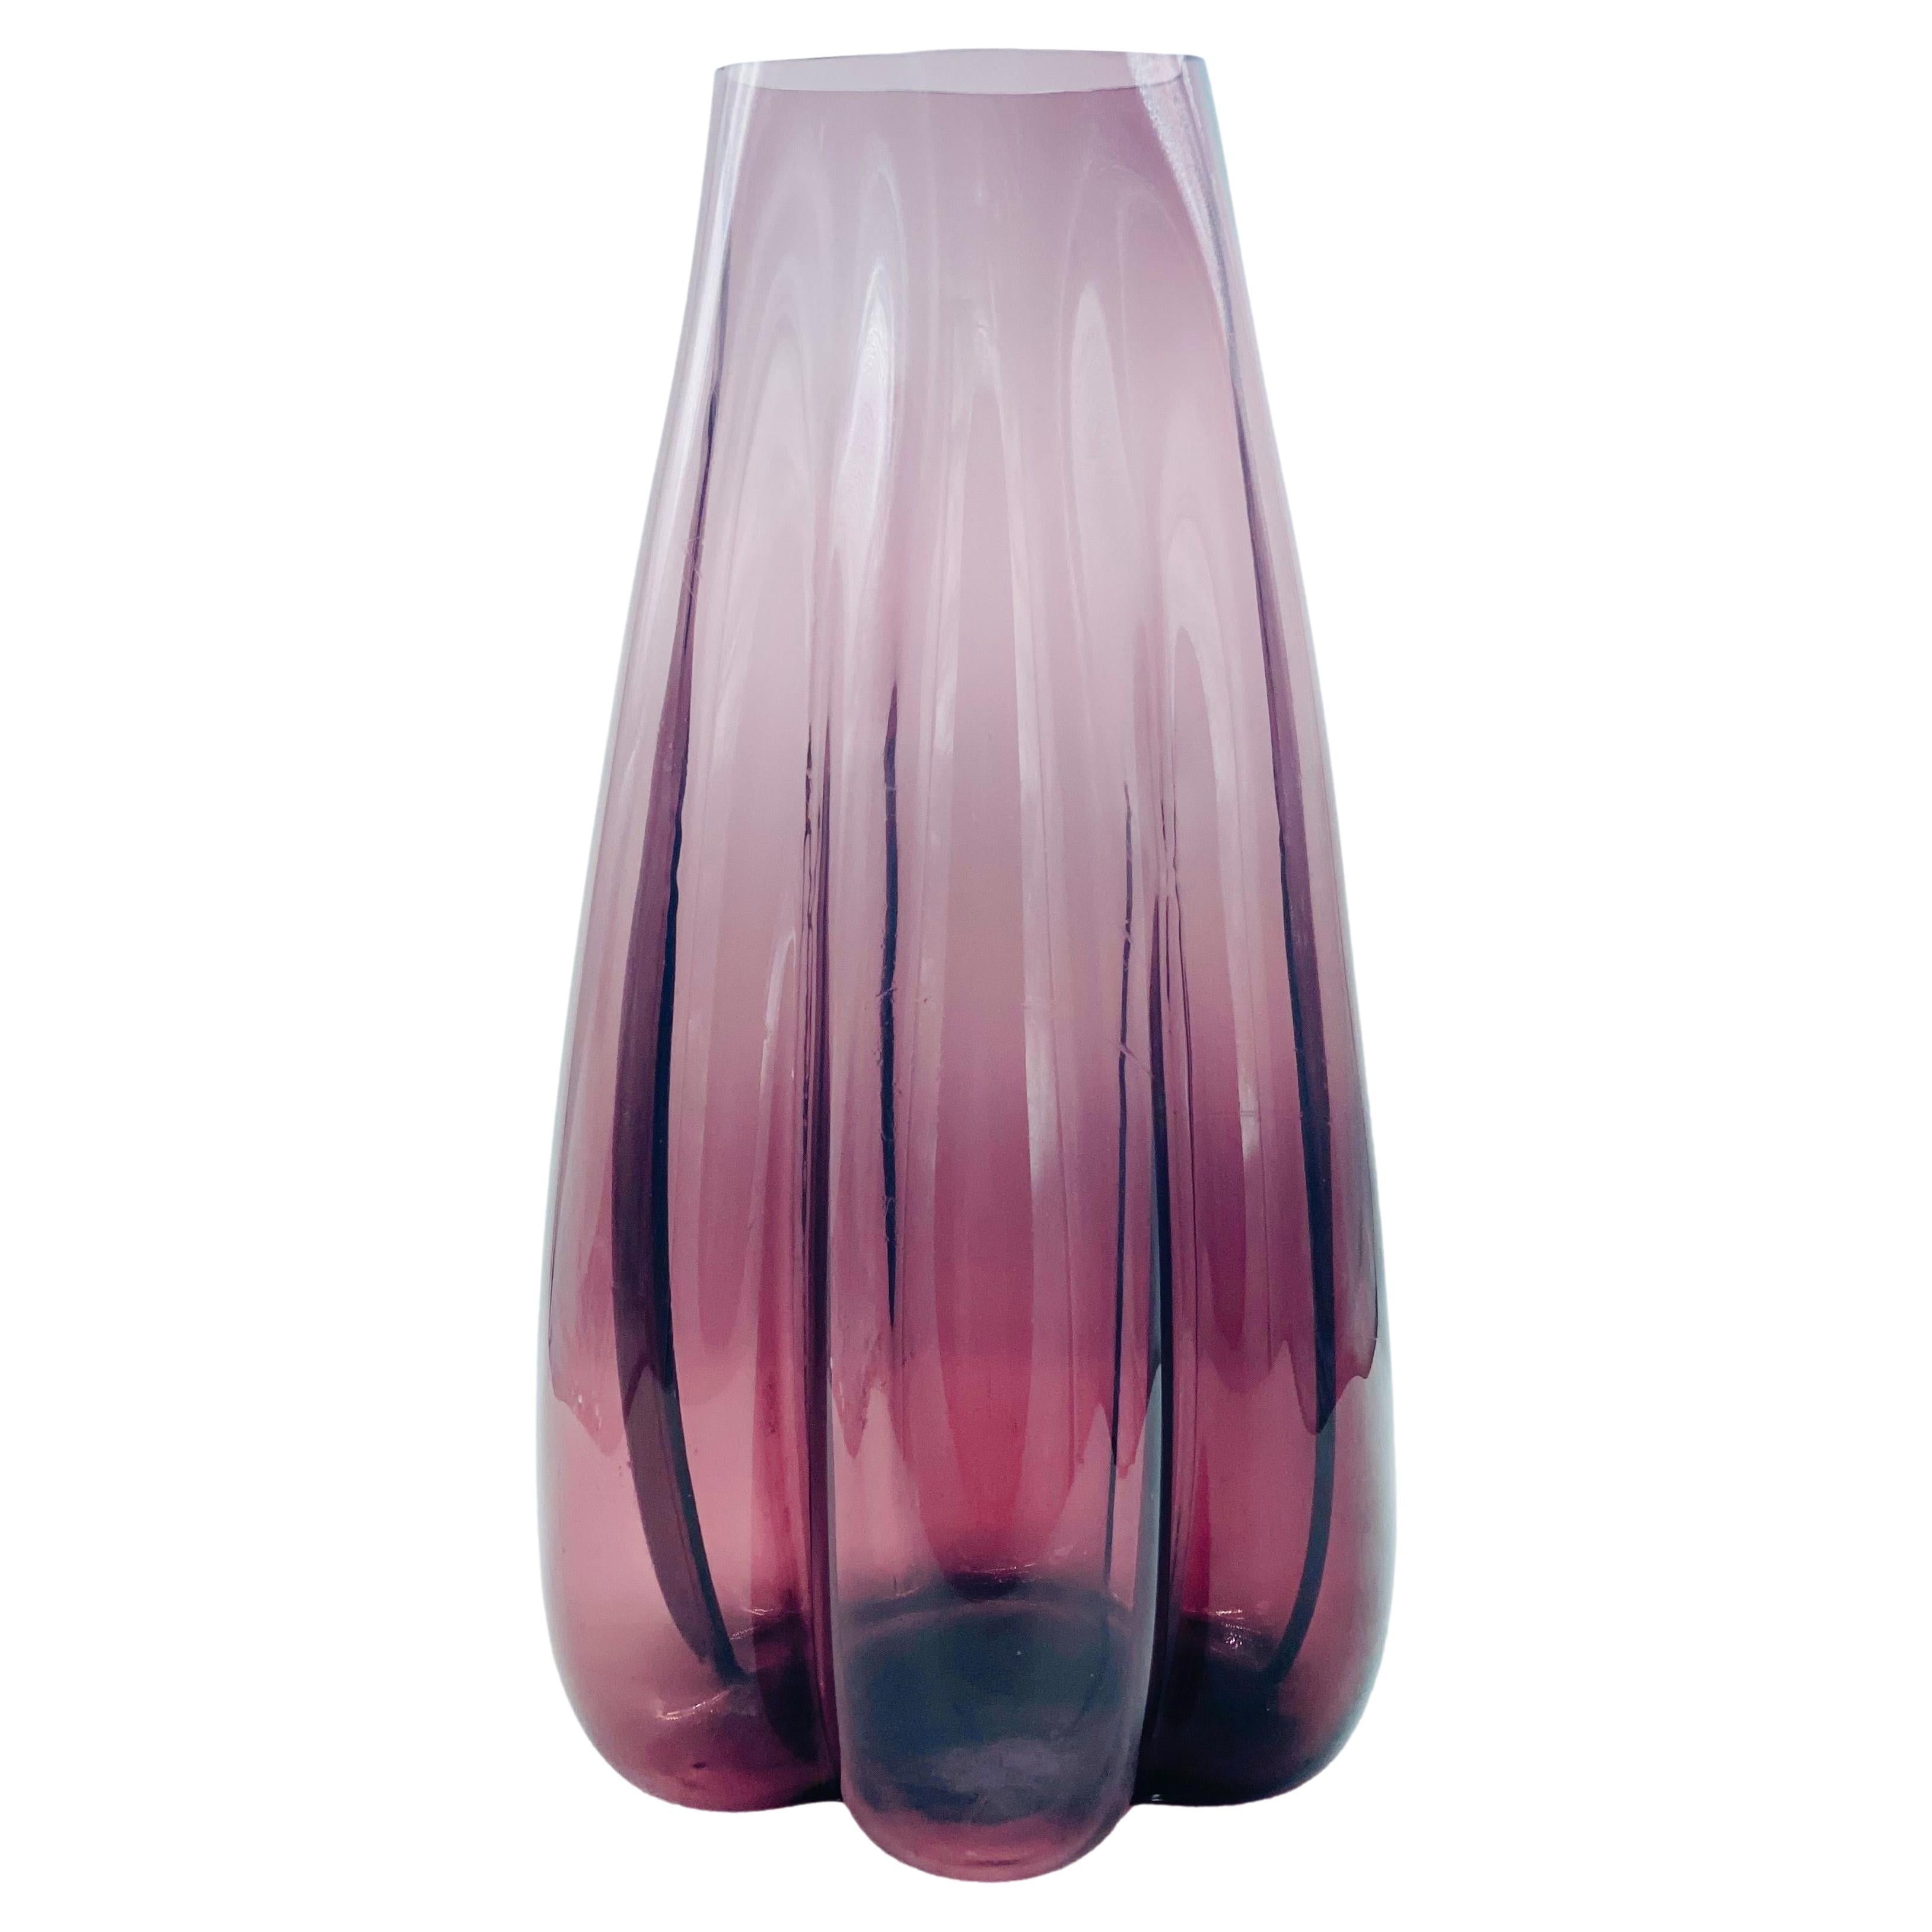 Alessadro Mendini Style Venetian Violet Murano Glass Vase, Italy 1970s For Sale